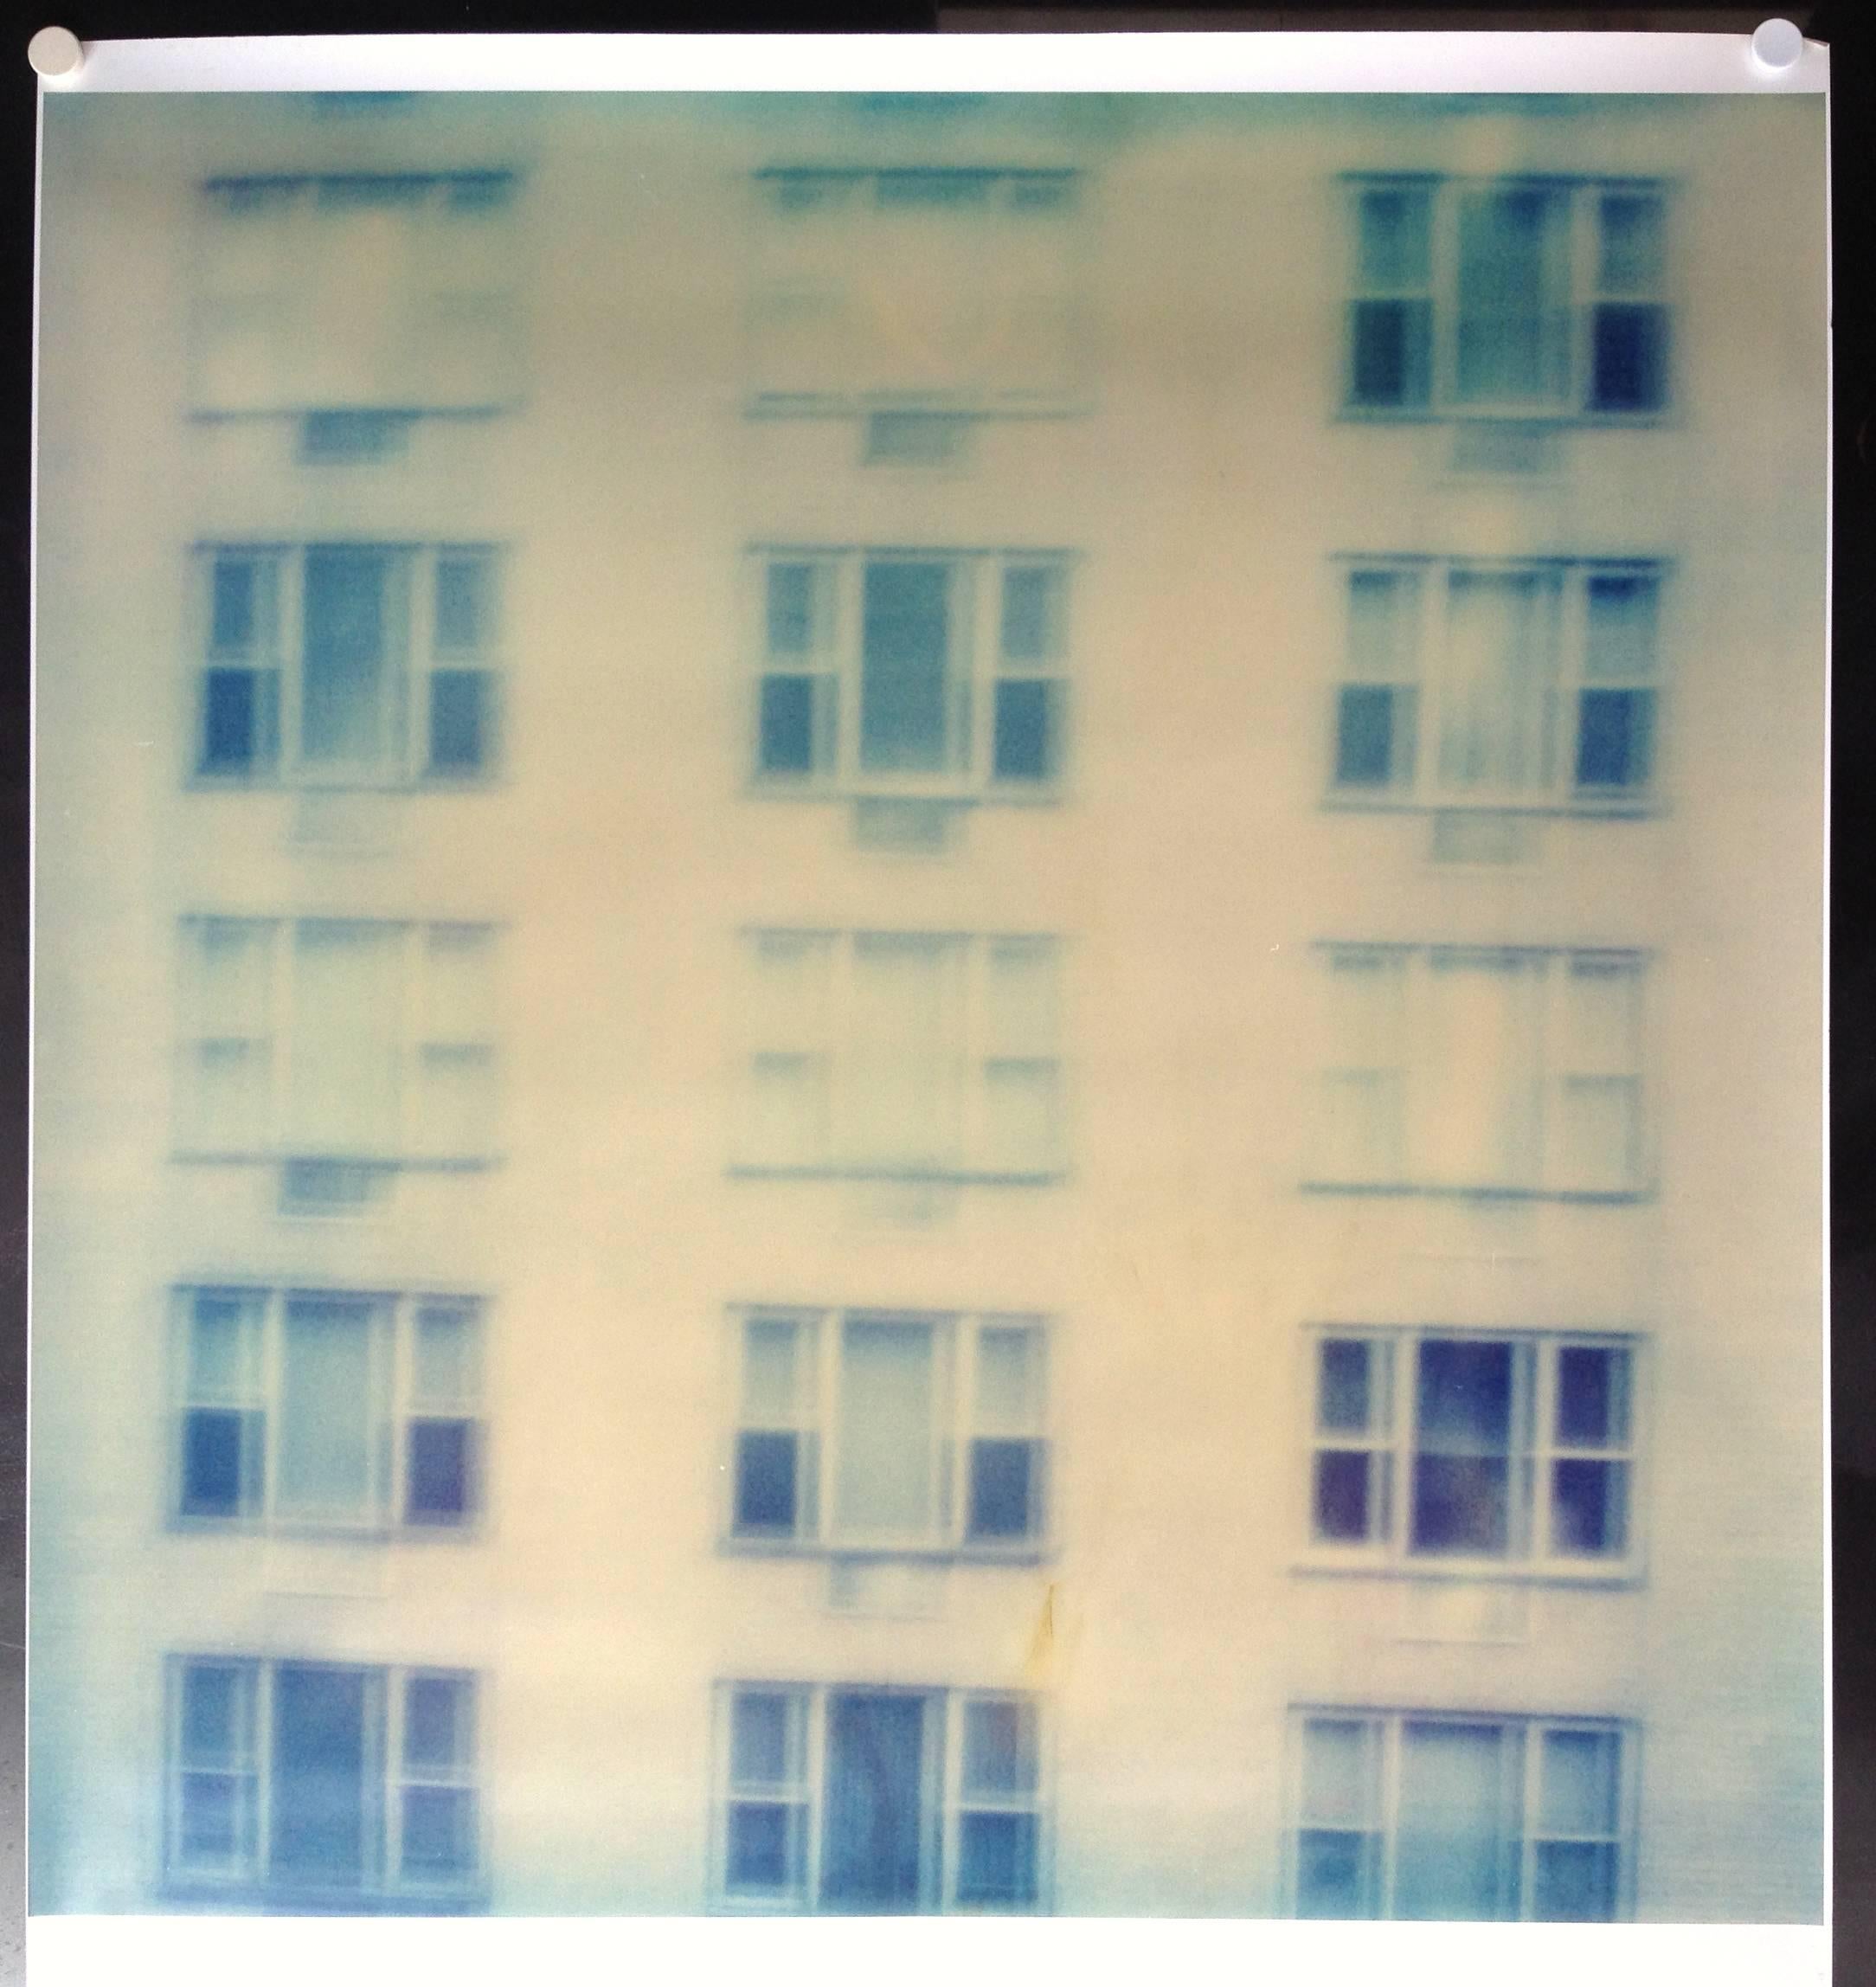 Across (Strange Love) - analog, based on am original Polaroid - Photograph by Stefanie Schneider